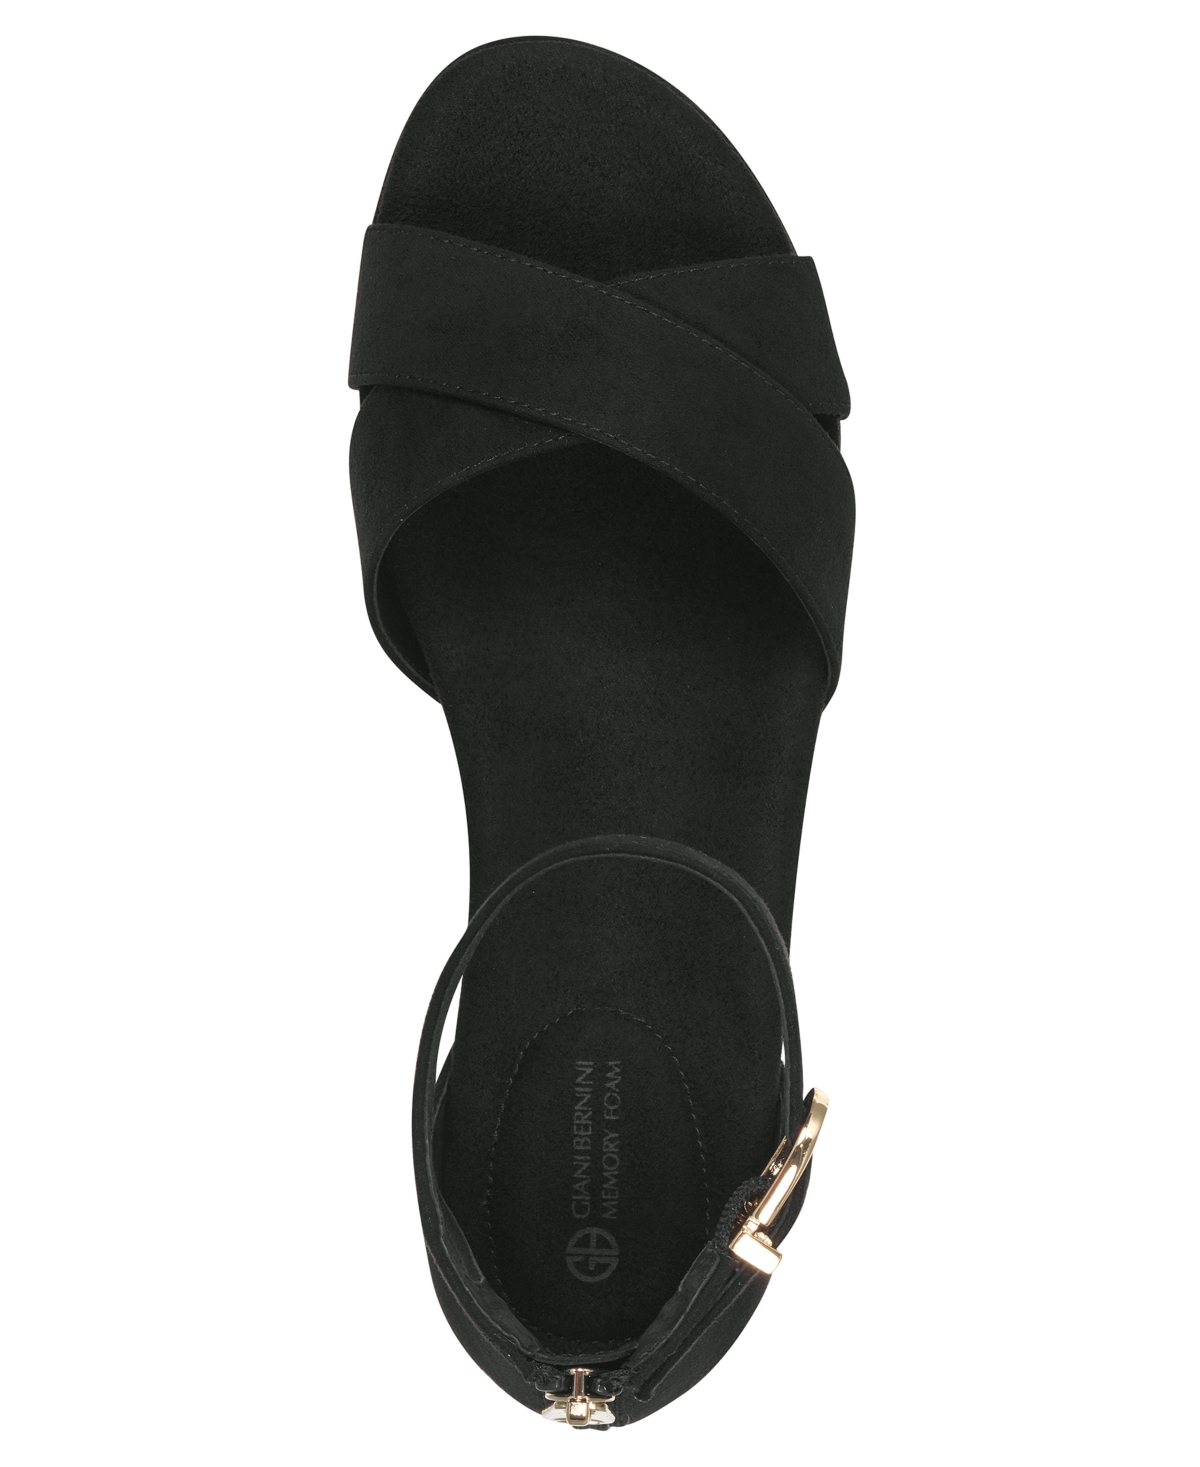 Shop Giani Bernini Women's Eviee Memory Foam Wedge Sandals, Created For Macy's In Light Blue